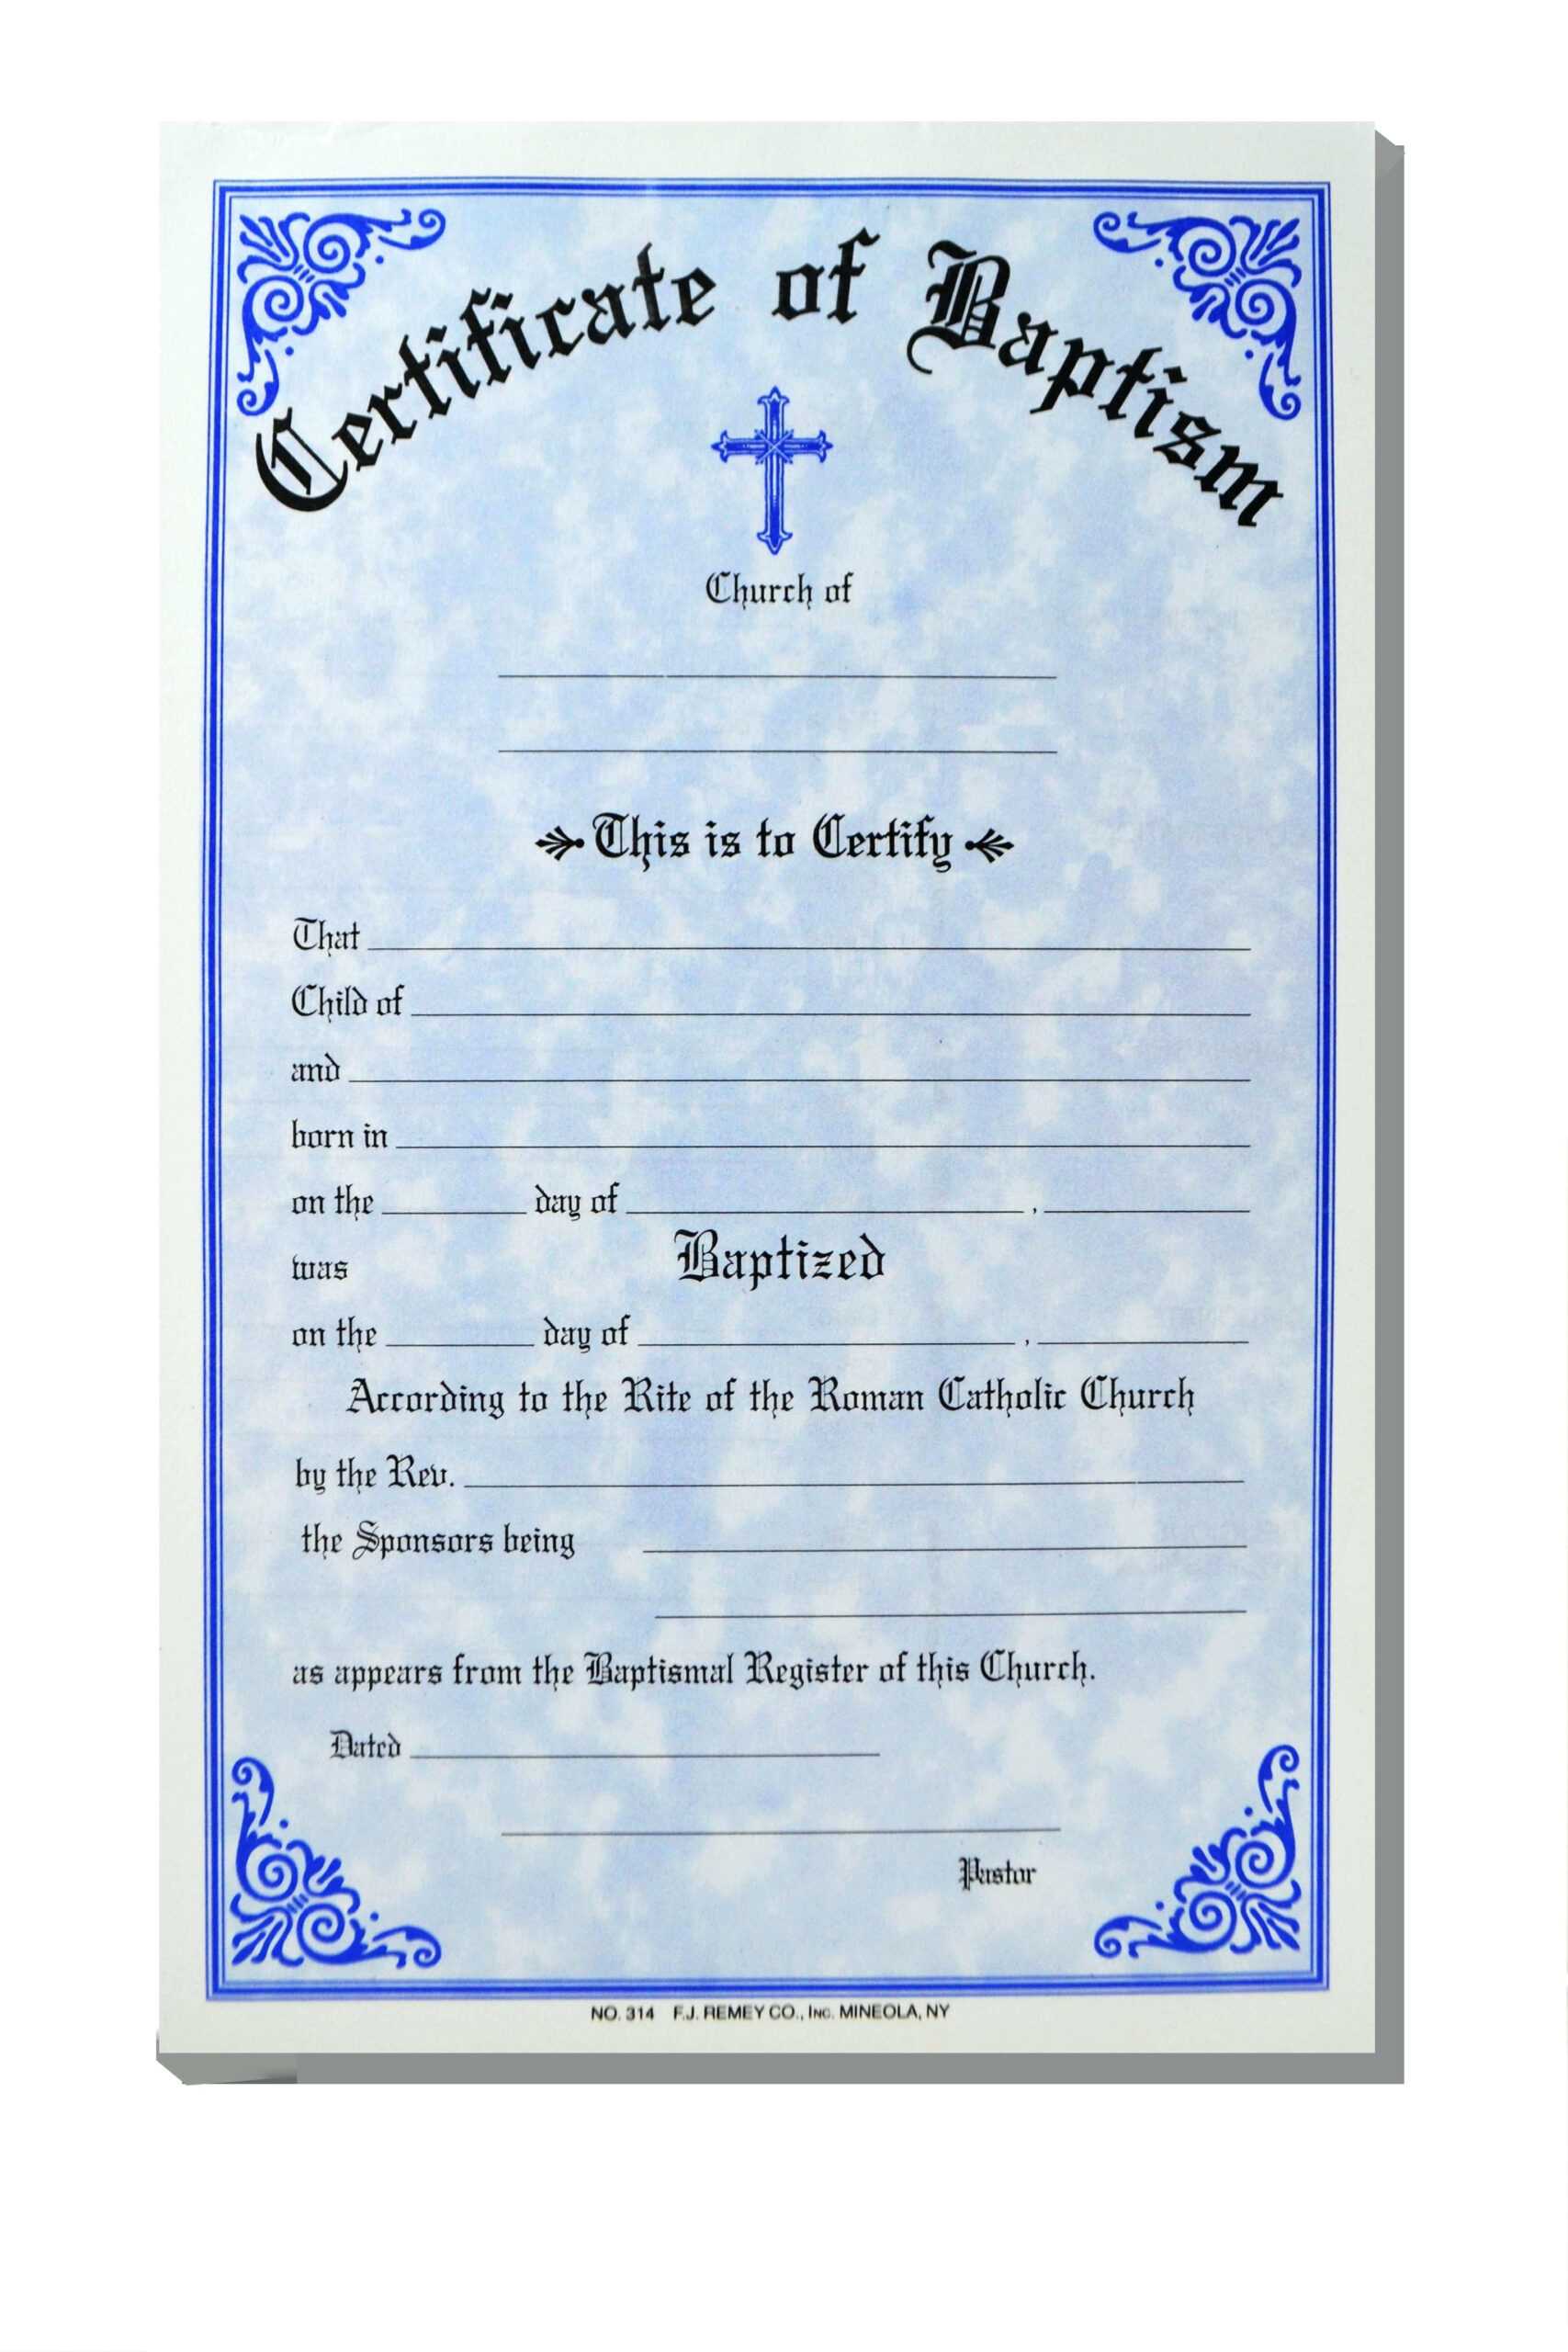 Baptism Certificate Template Word – Heartwork Inside Baby Christening Certificate Template